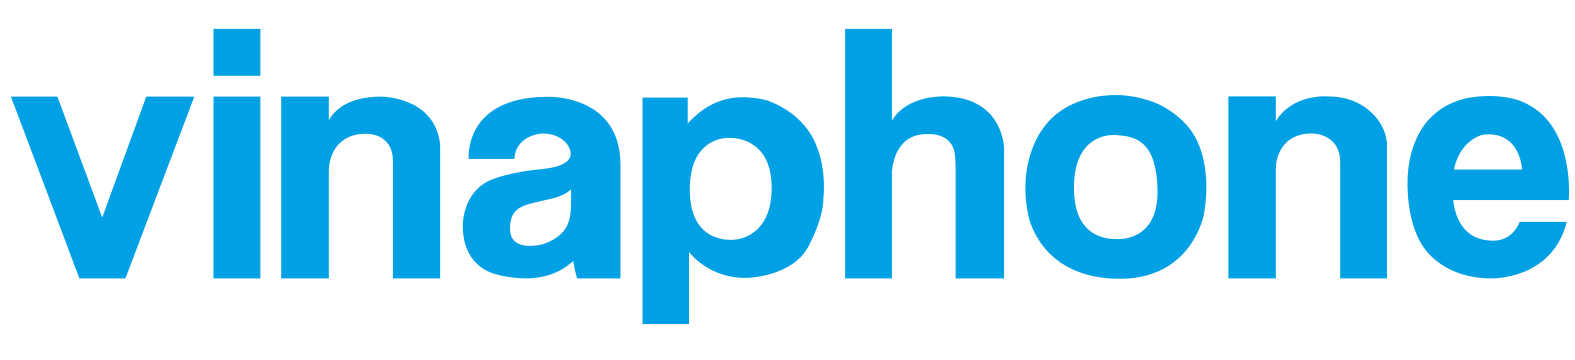 Vinaphone Brand Logo